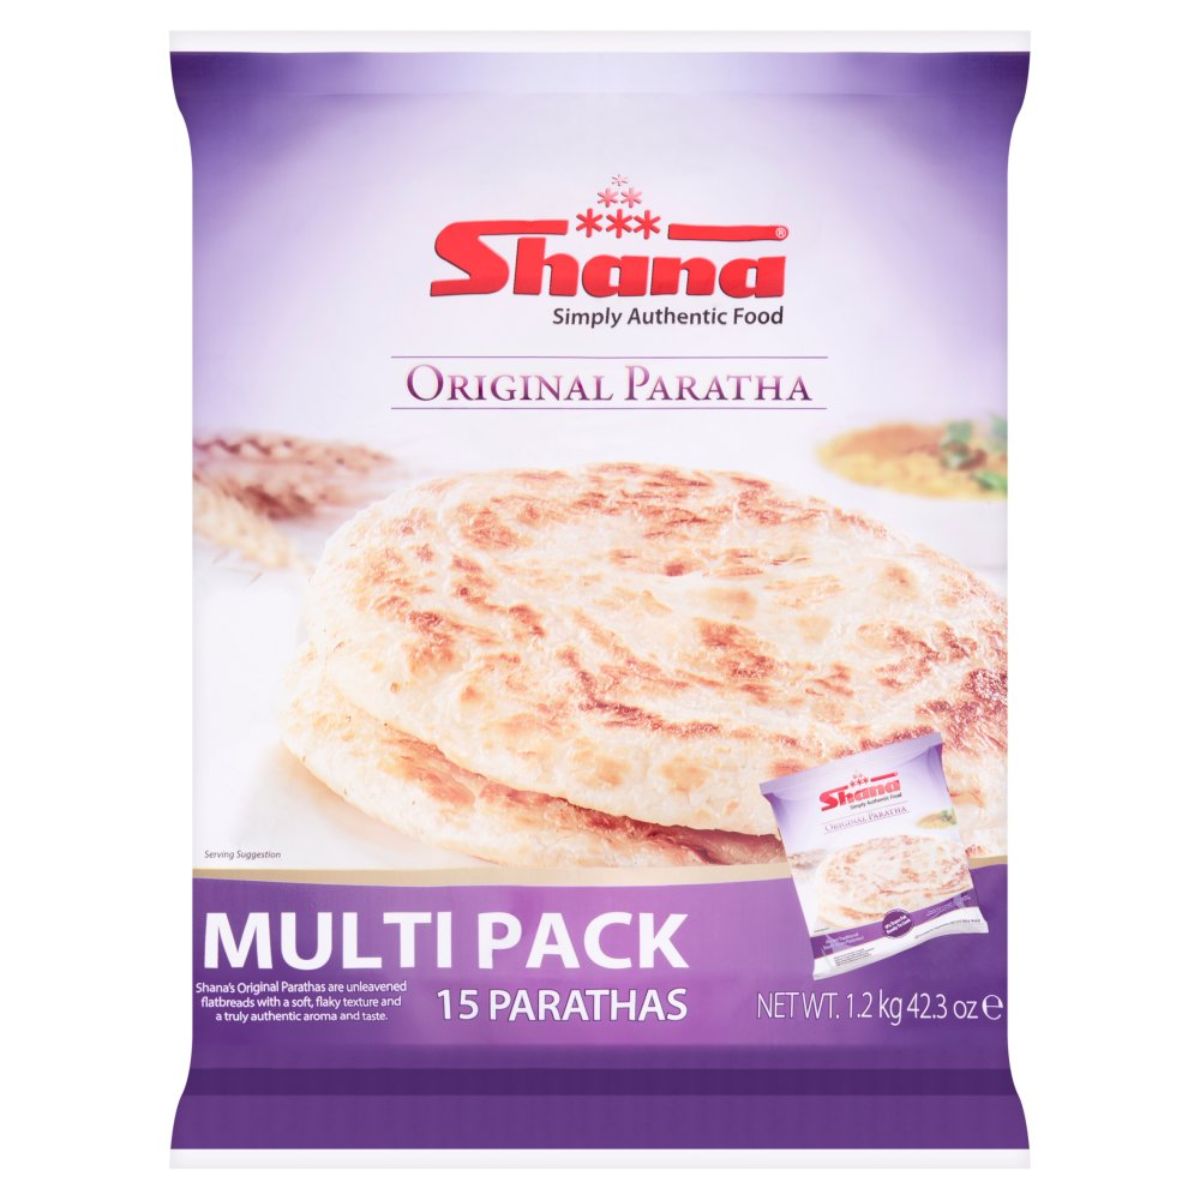 Shana - 15 Original Parathas Multi Pack - 1.2kg multi pack of parathas.